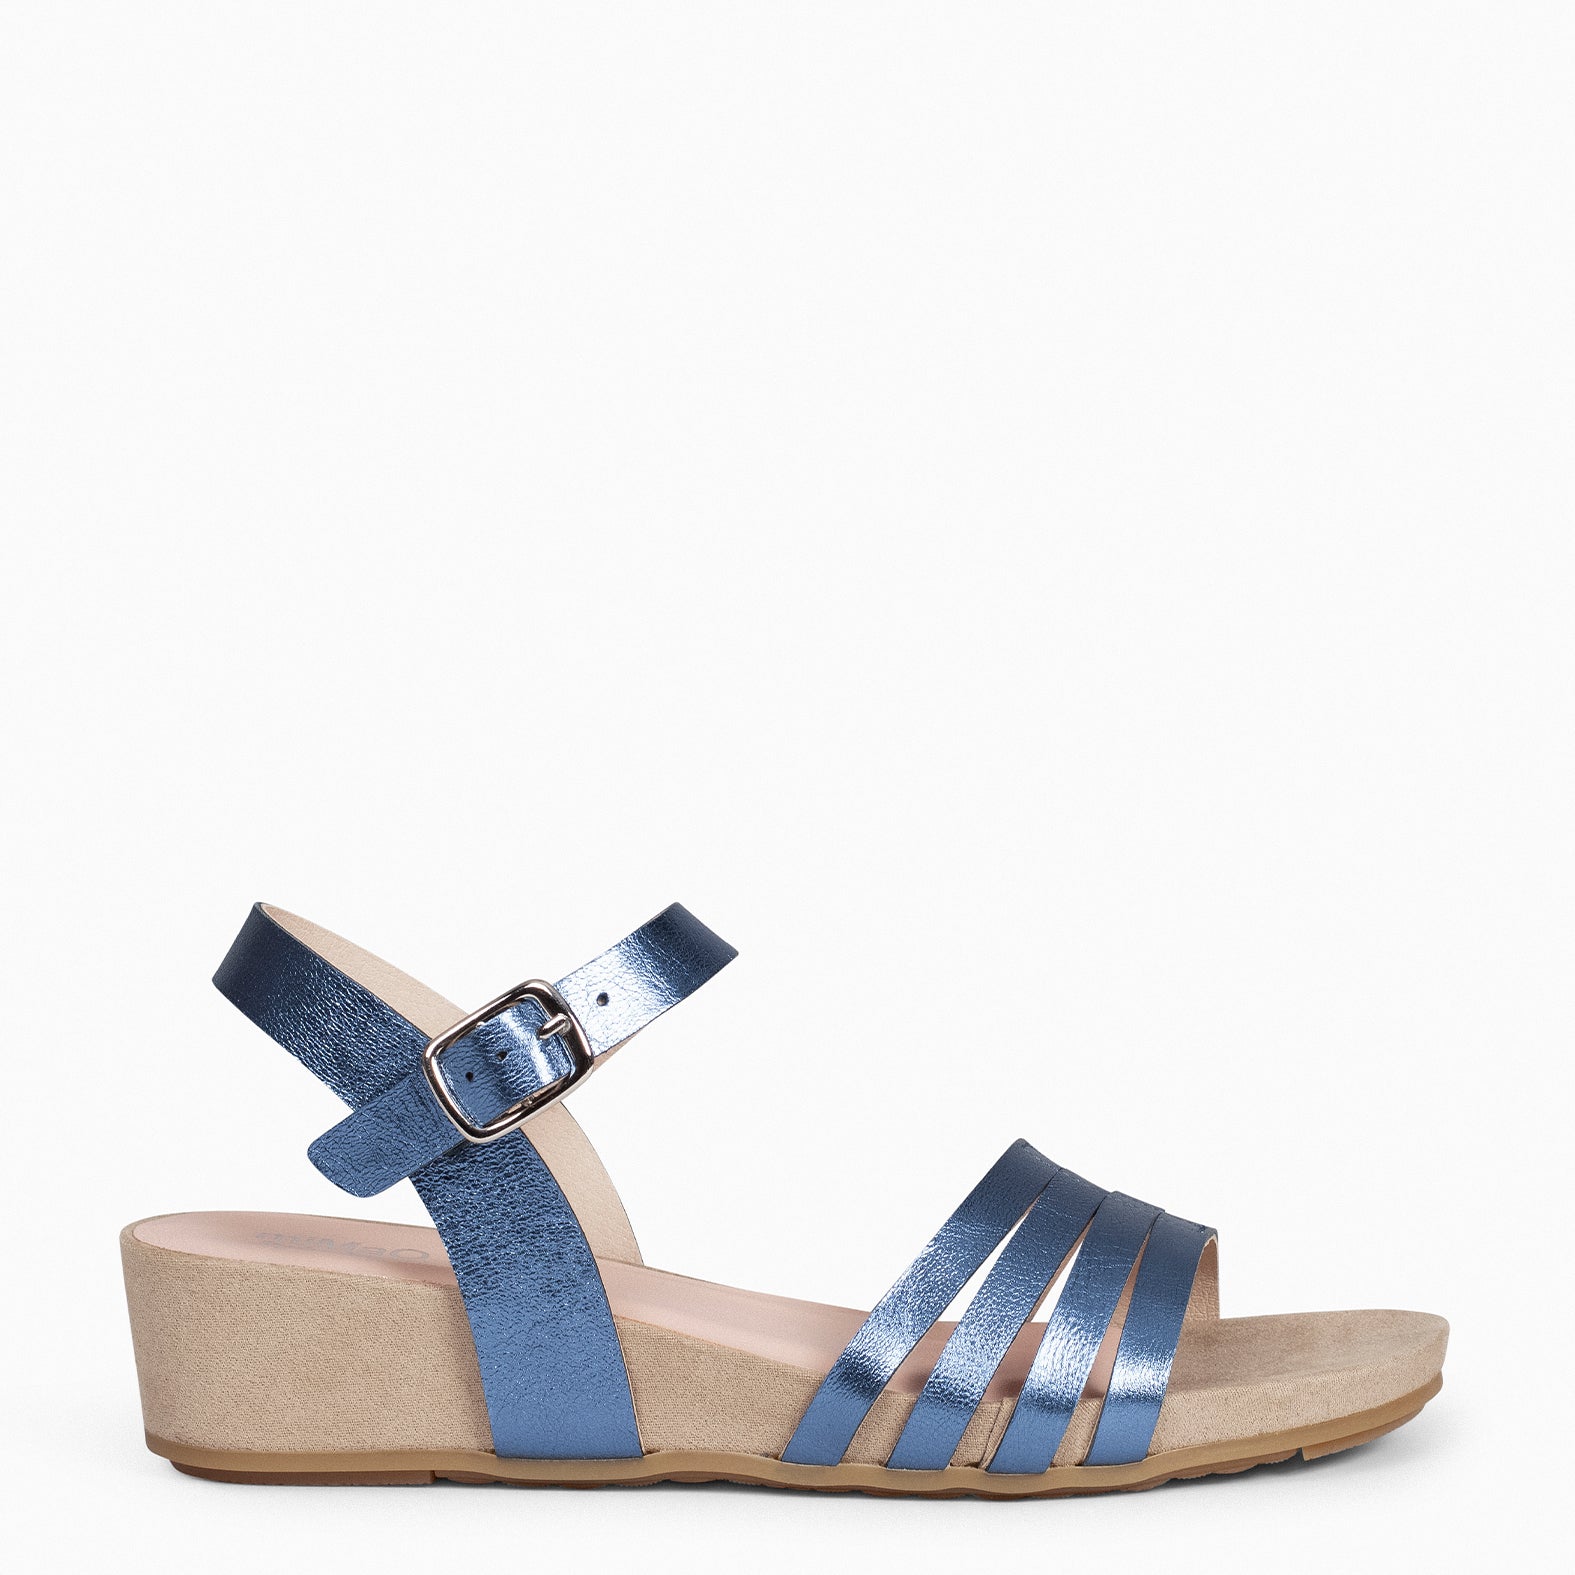 MESINA – BLUE Wedge sandal with metallic straps 